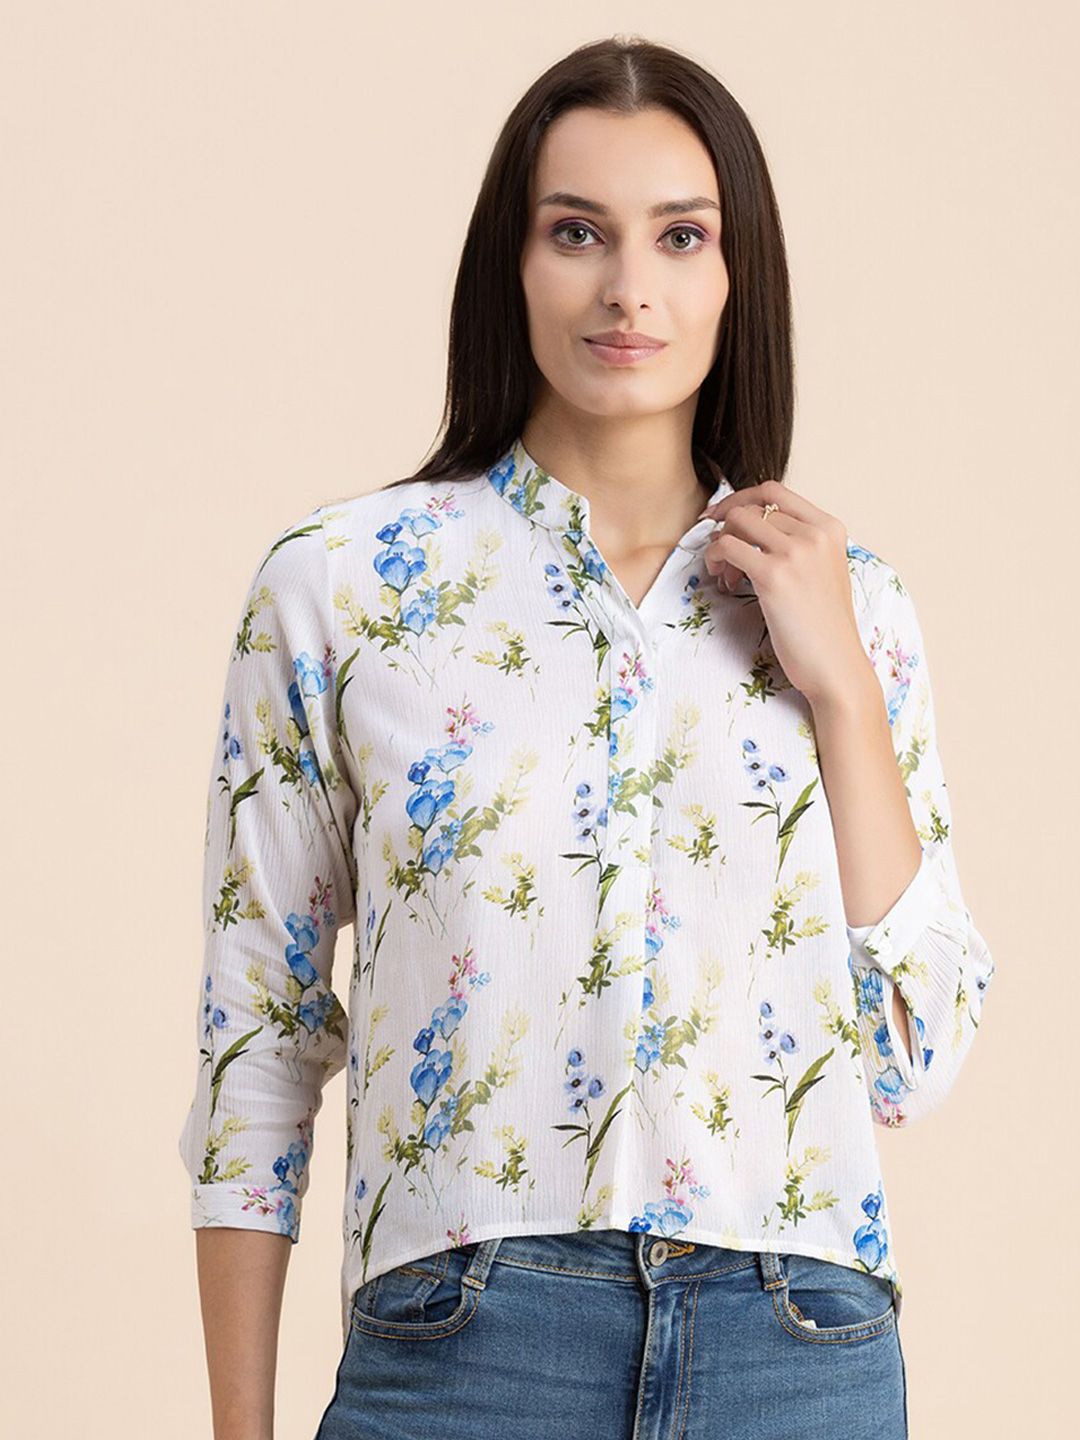 Moomaya White Floral Print Mandarin Collar Crepe Shirt Style Top Price in India